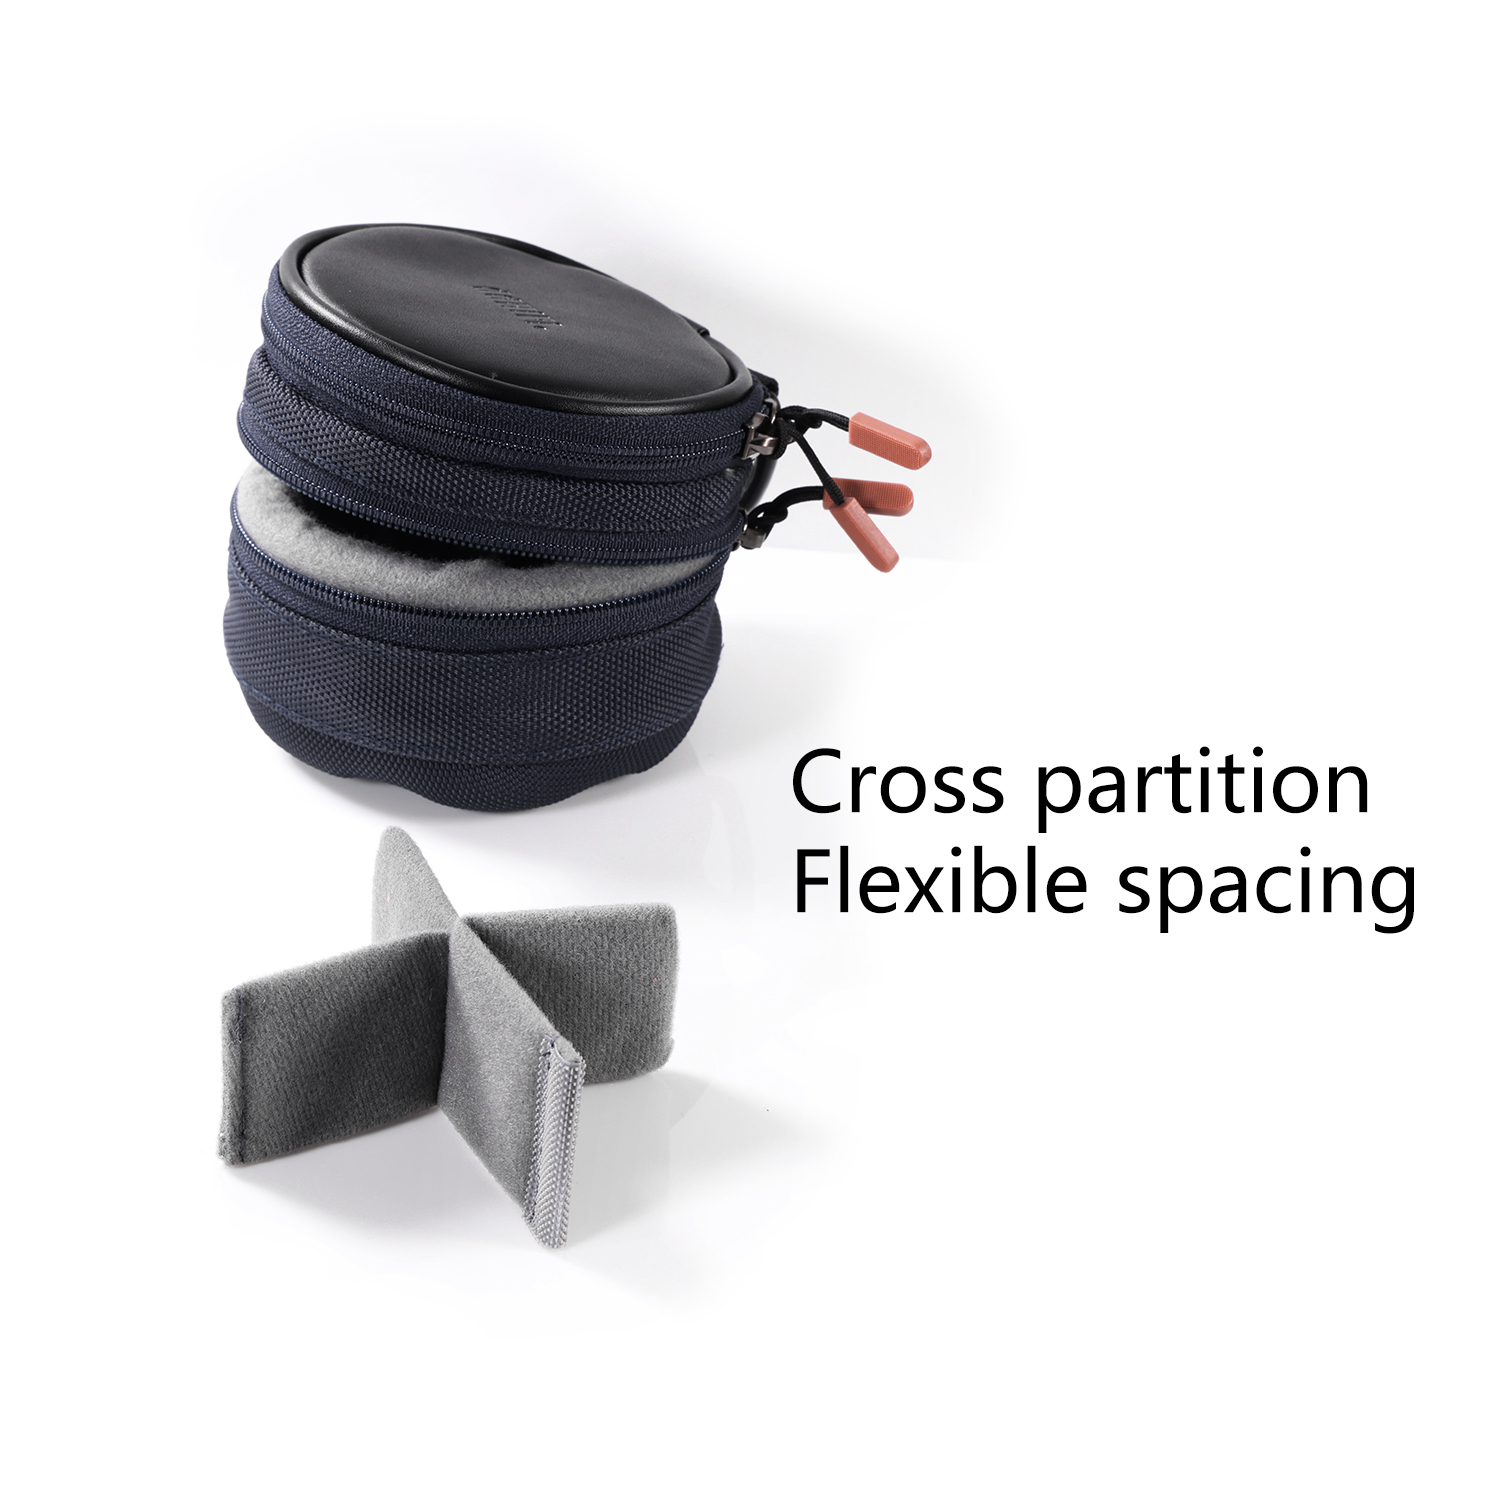 DD ddHiFi C100 cross partition flexible spacing